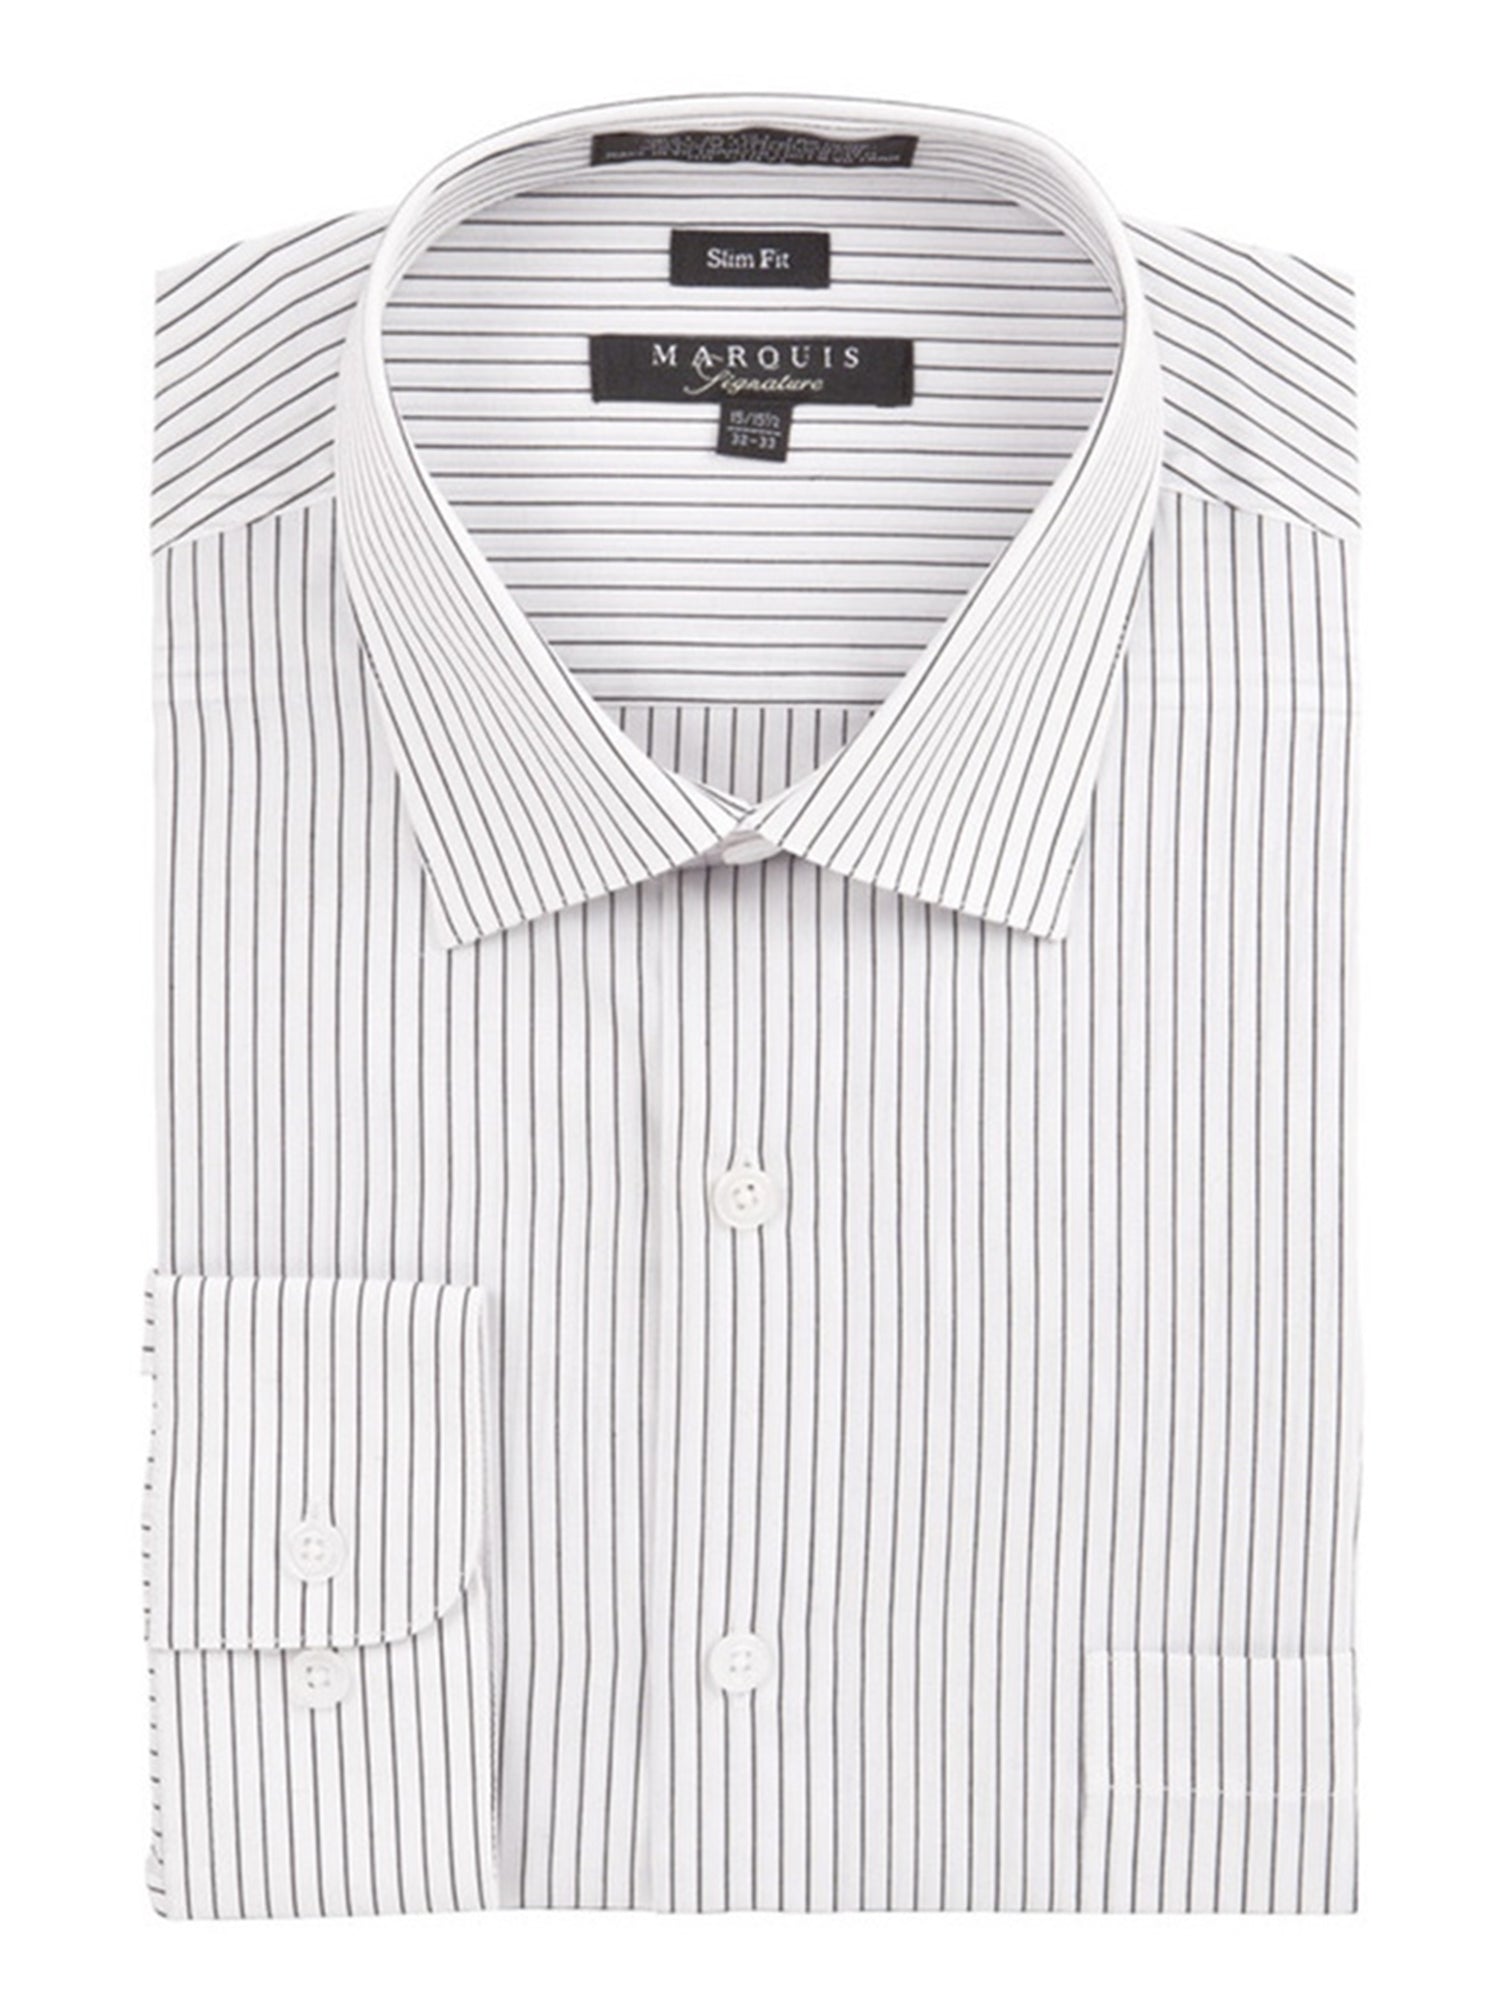 Marquis Men's Pin Striped Slim Fit Dress Shirt Slim Fit Dress Shirt Marquis White X - Large 17.5 35-36 